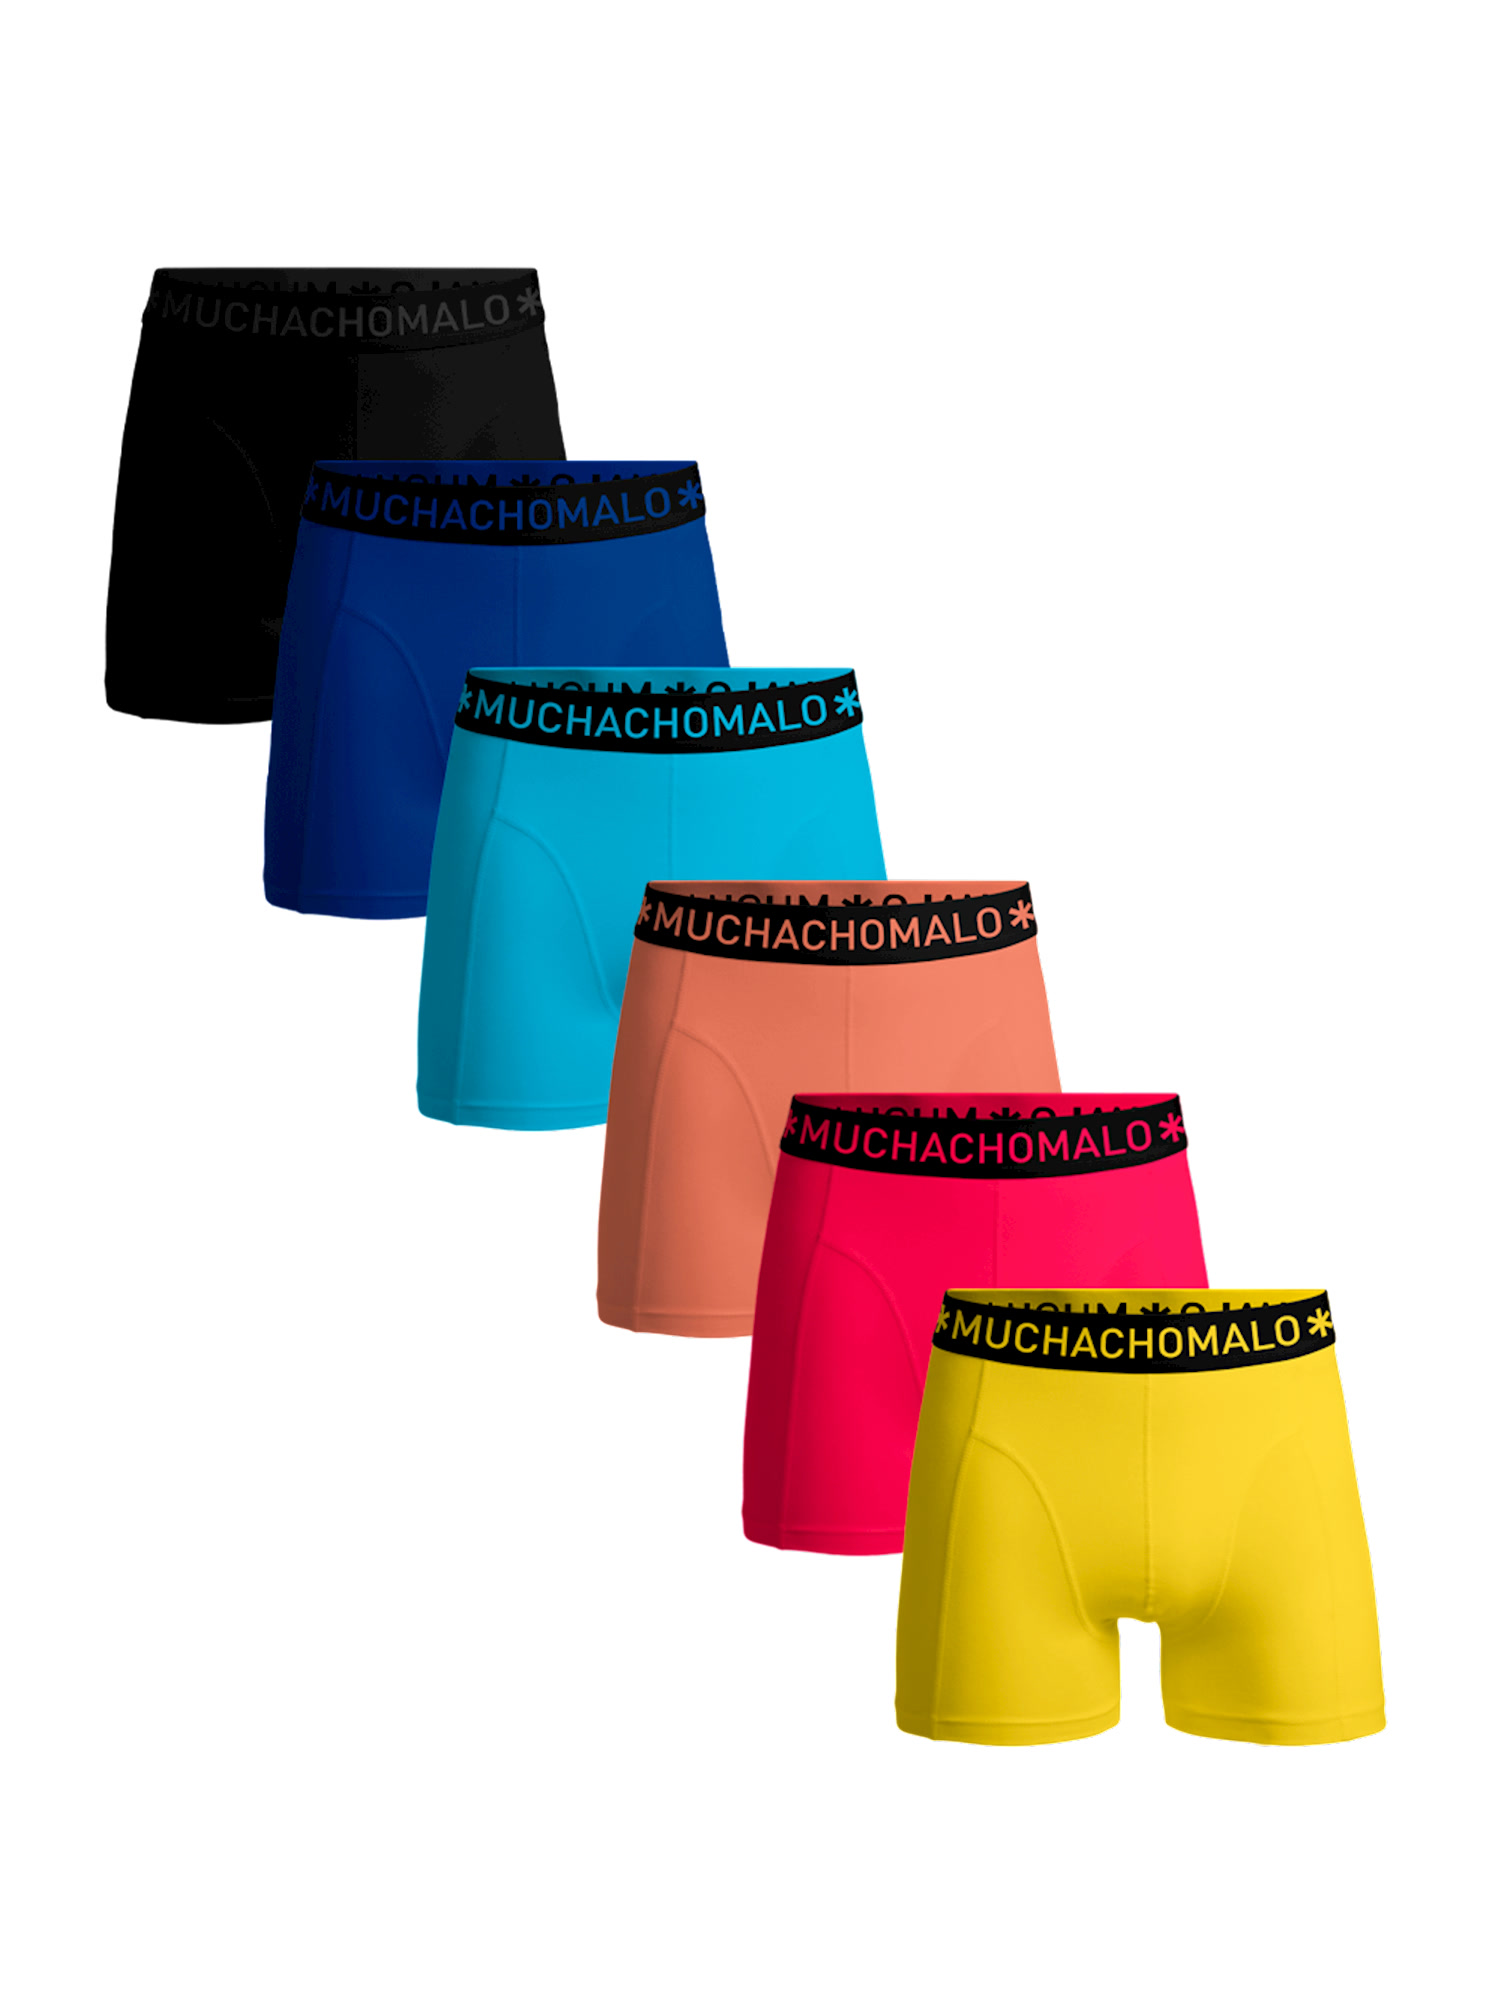 Боксеры Muchachomalo 6er-Set: Boxershorts, цвет Black/Blue/Blue/Pink/Orange/Yellow боксеры muchachomalo 5er set boxershorts цвет black blue blue green pink